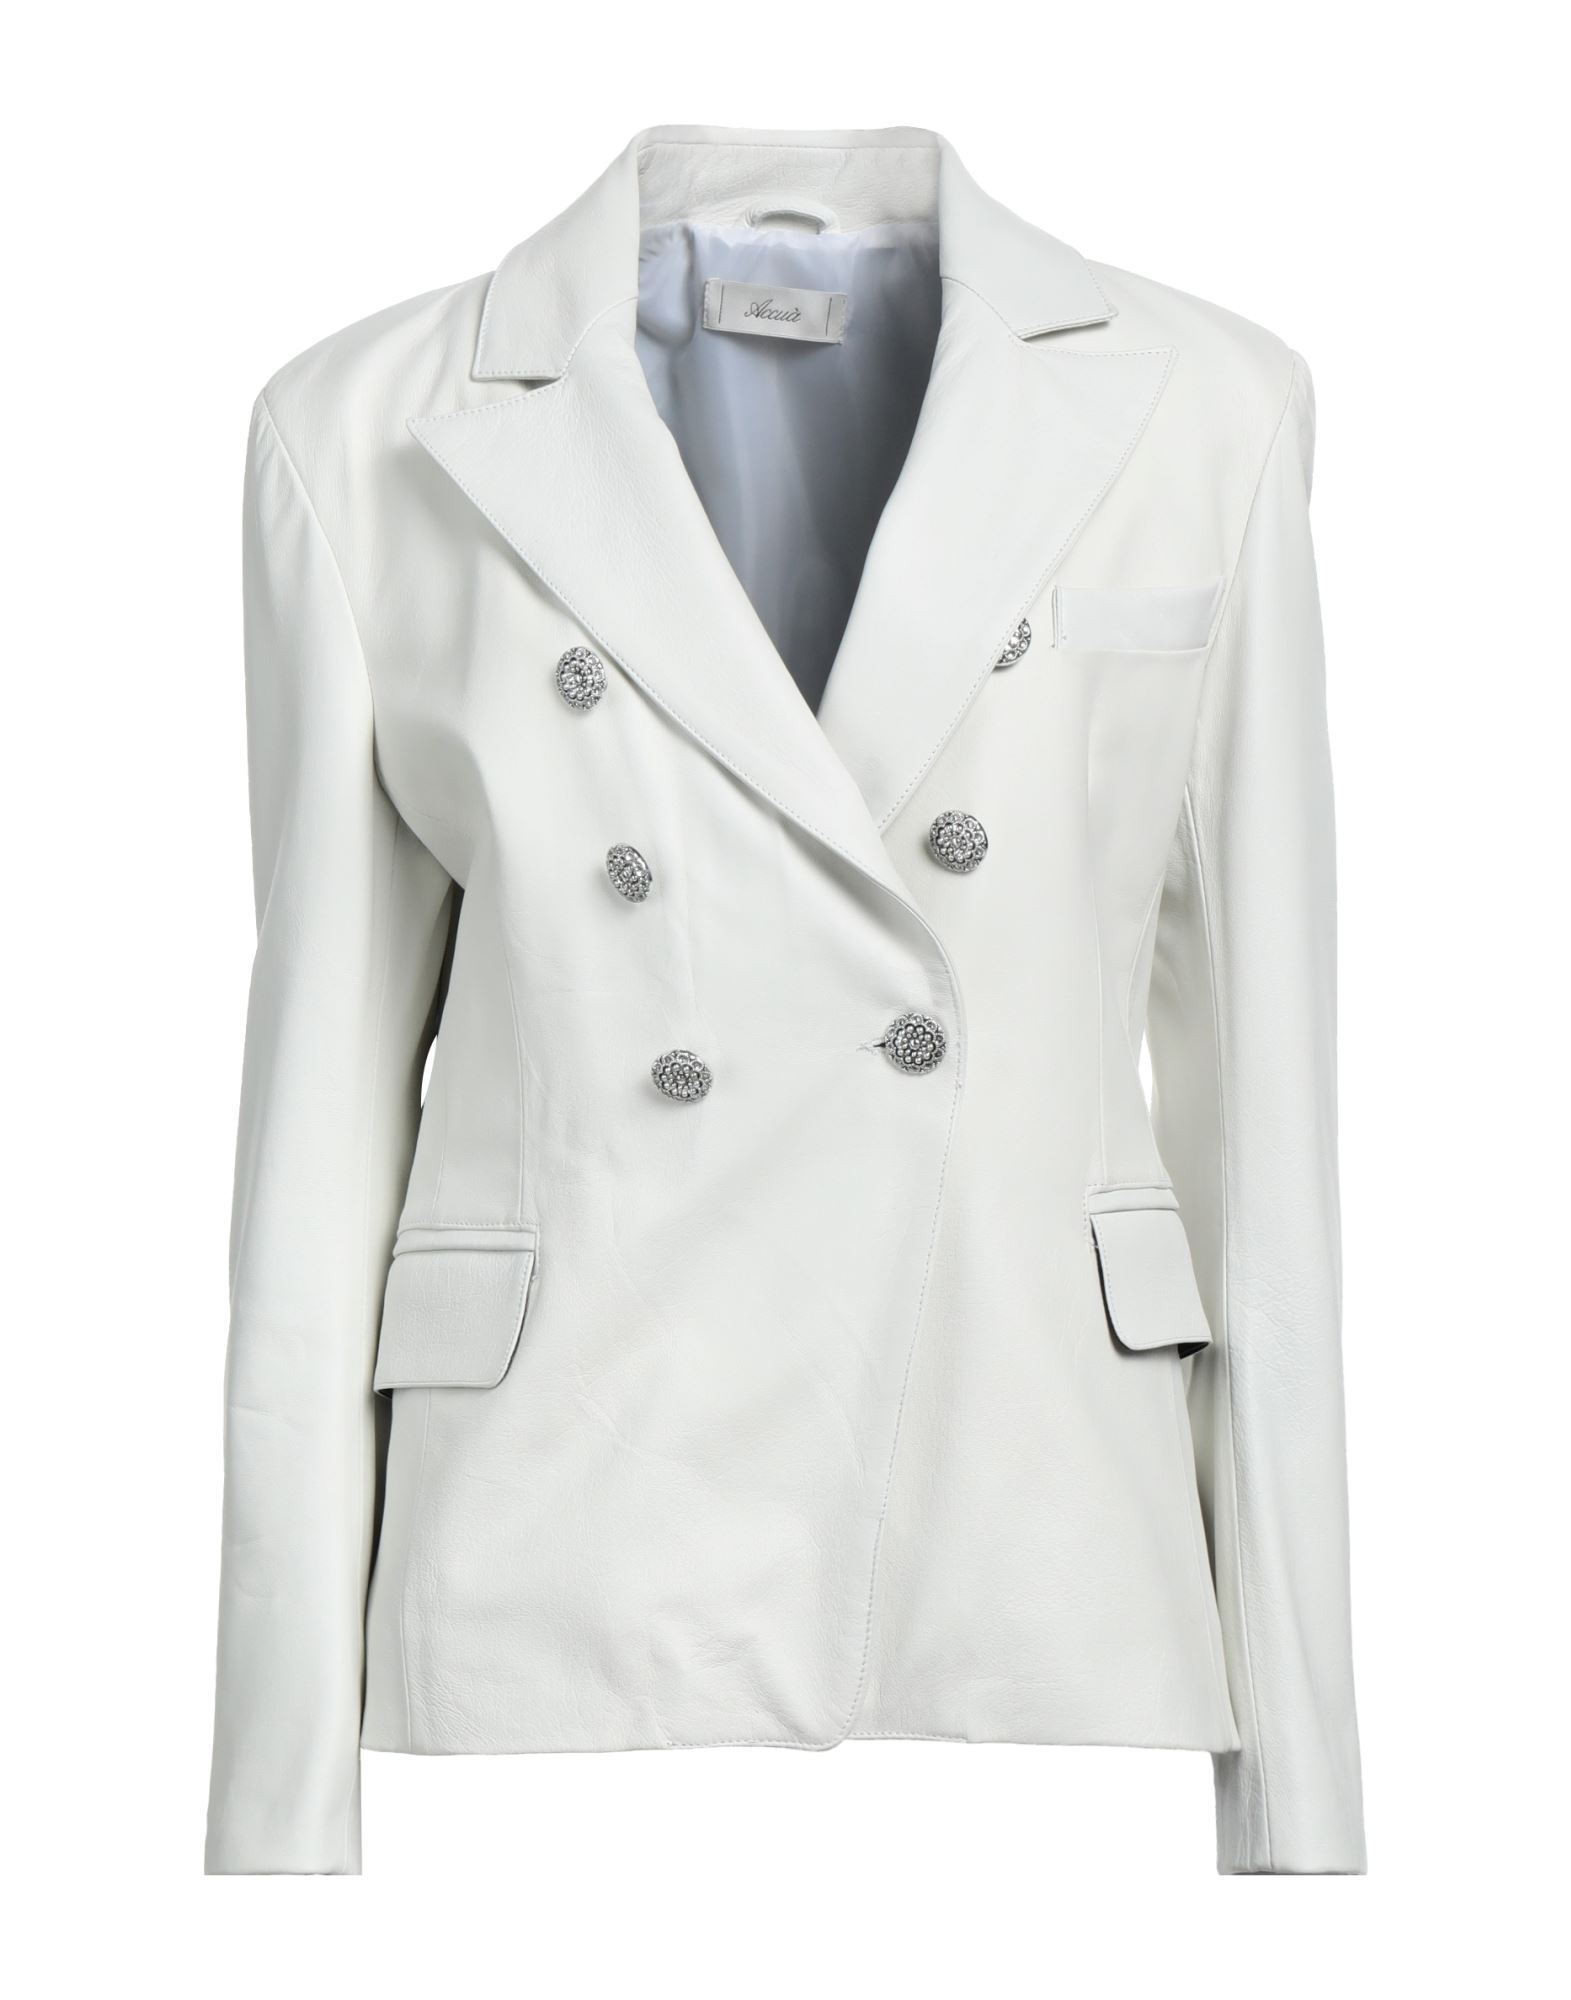 Accuà By Psr Woman Suit Jacket White Size 6 Soft Leather